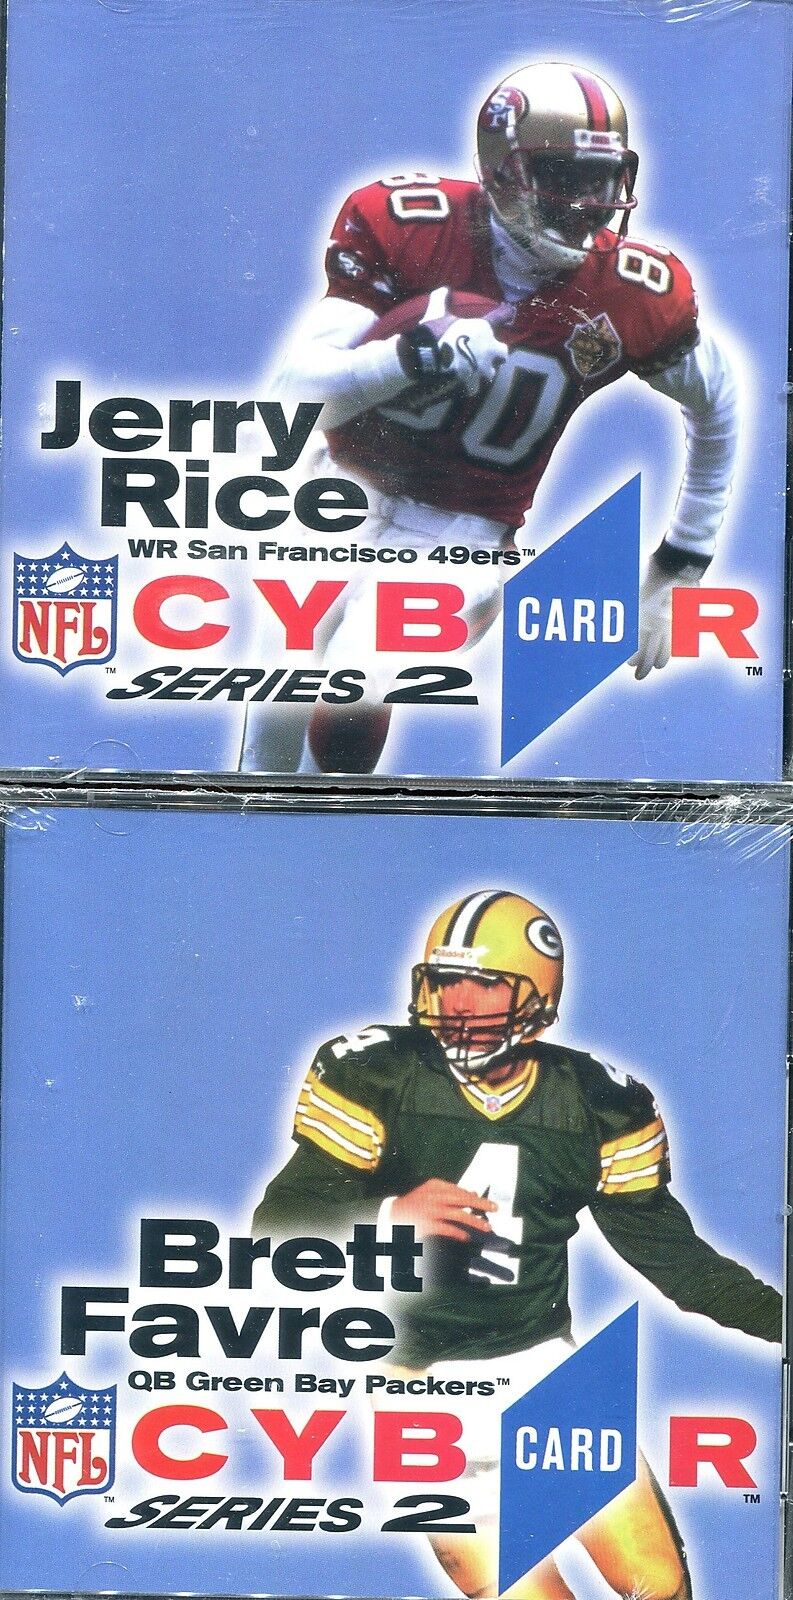 NFL CYBER CARD SERIES 2 - JERRY RICE & BRETT FAVRE